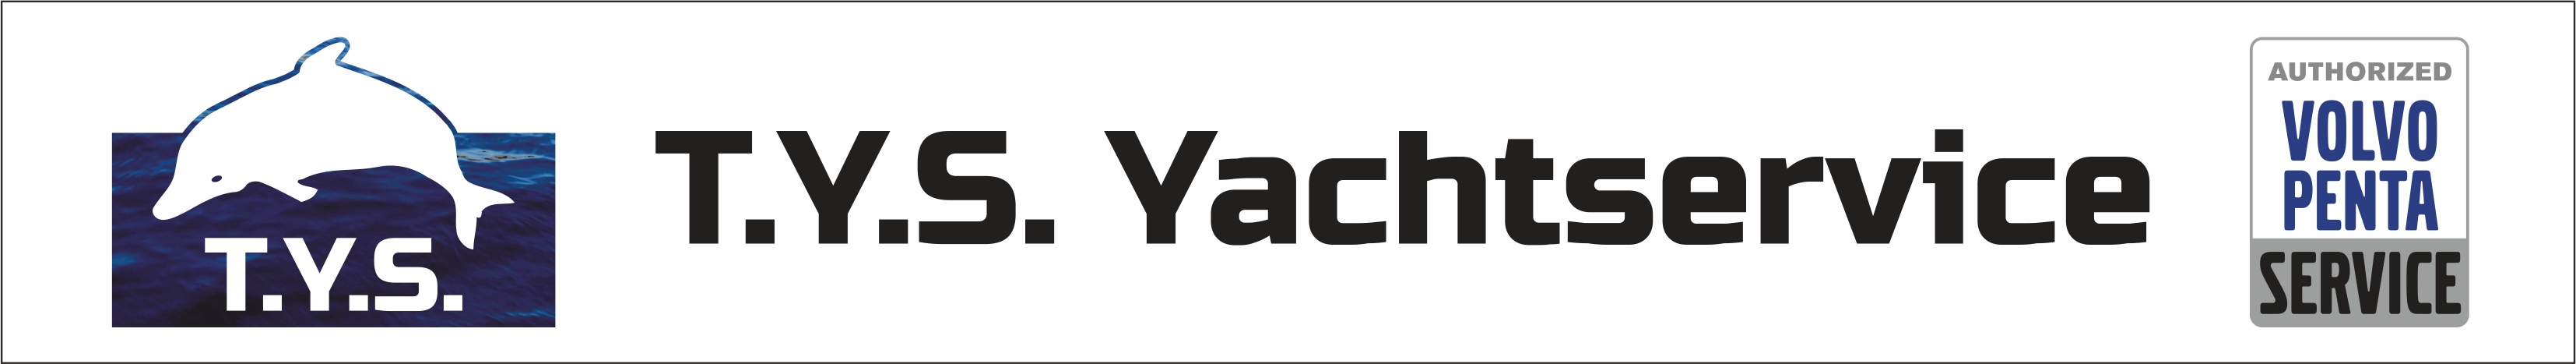 HJH T.Y.S. Yachtservice logo